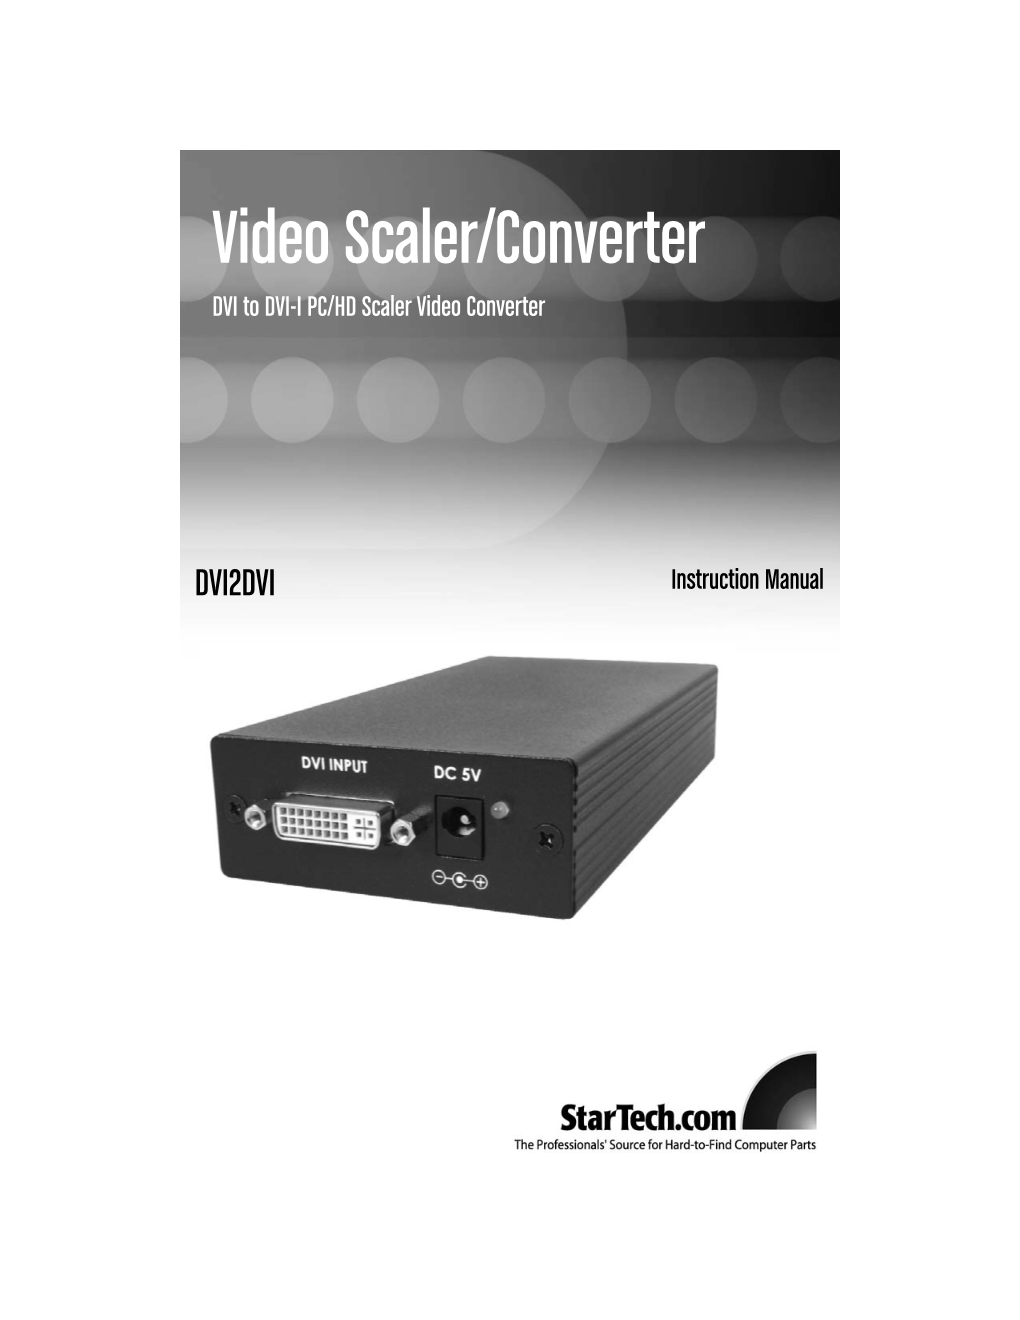 Video Scaler/Converter DVI to DVI-I PC/HD Scaler Video Converter